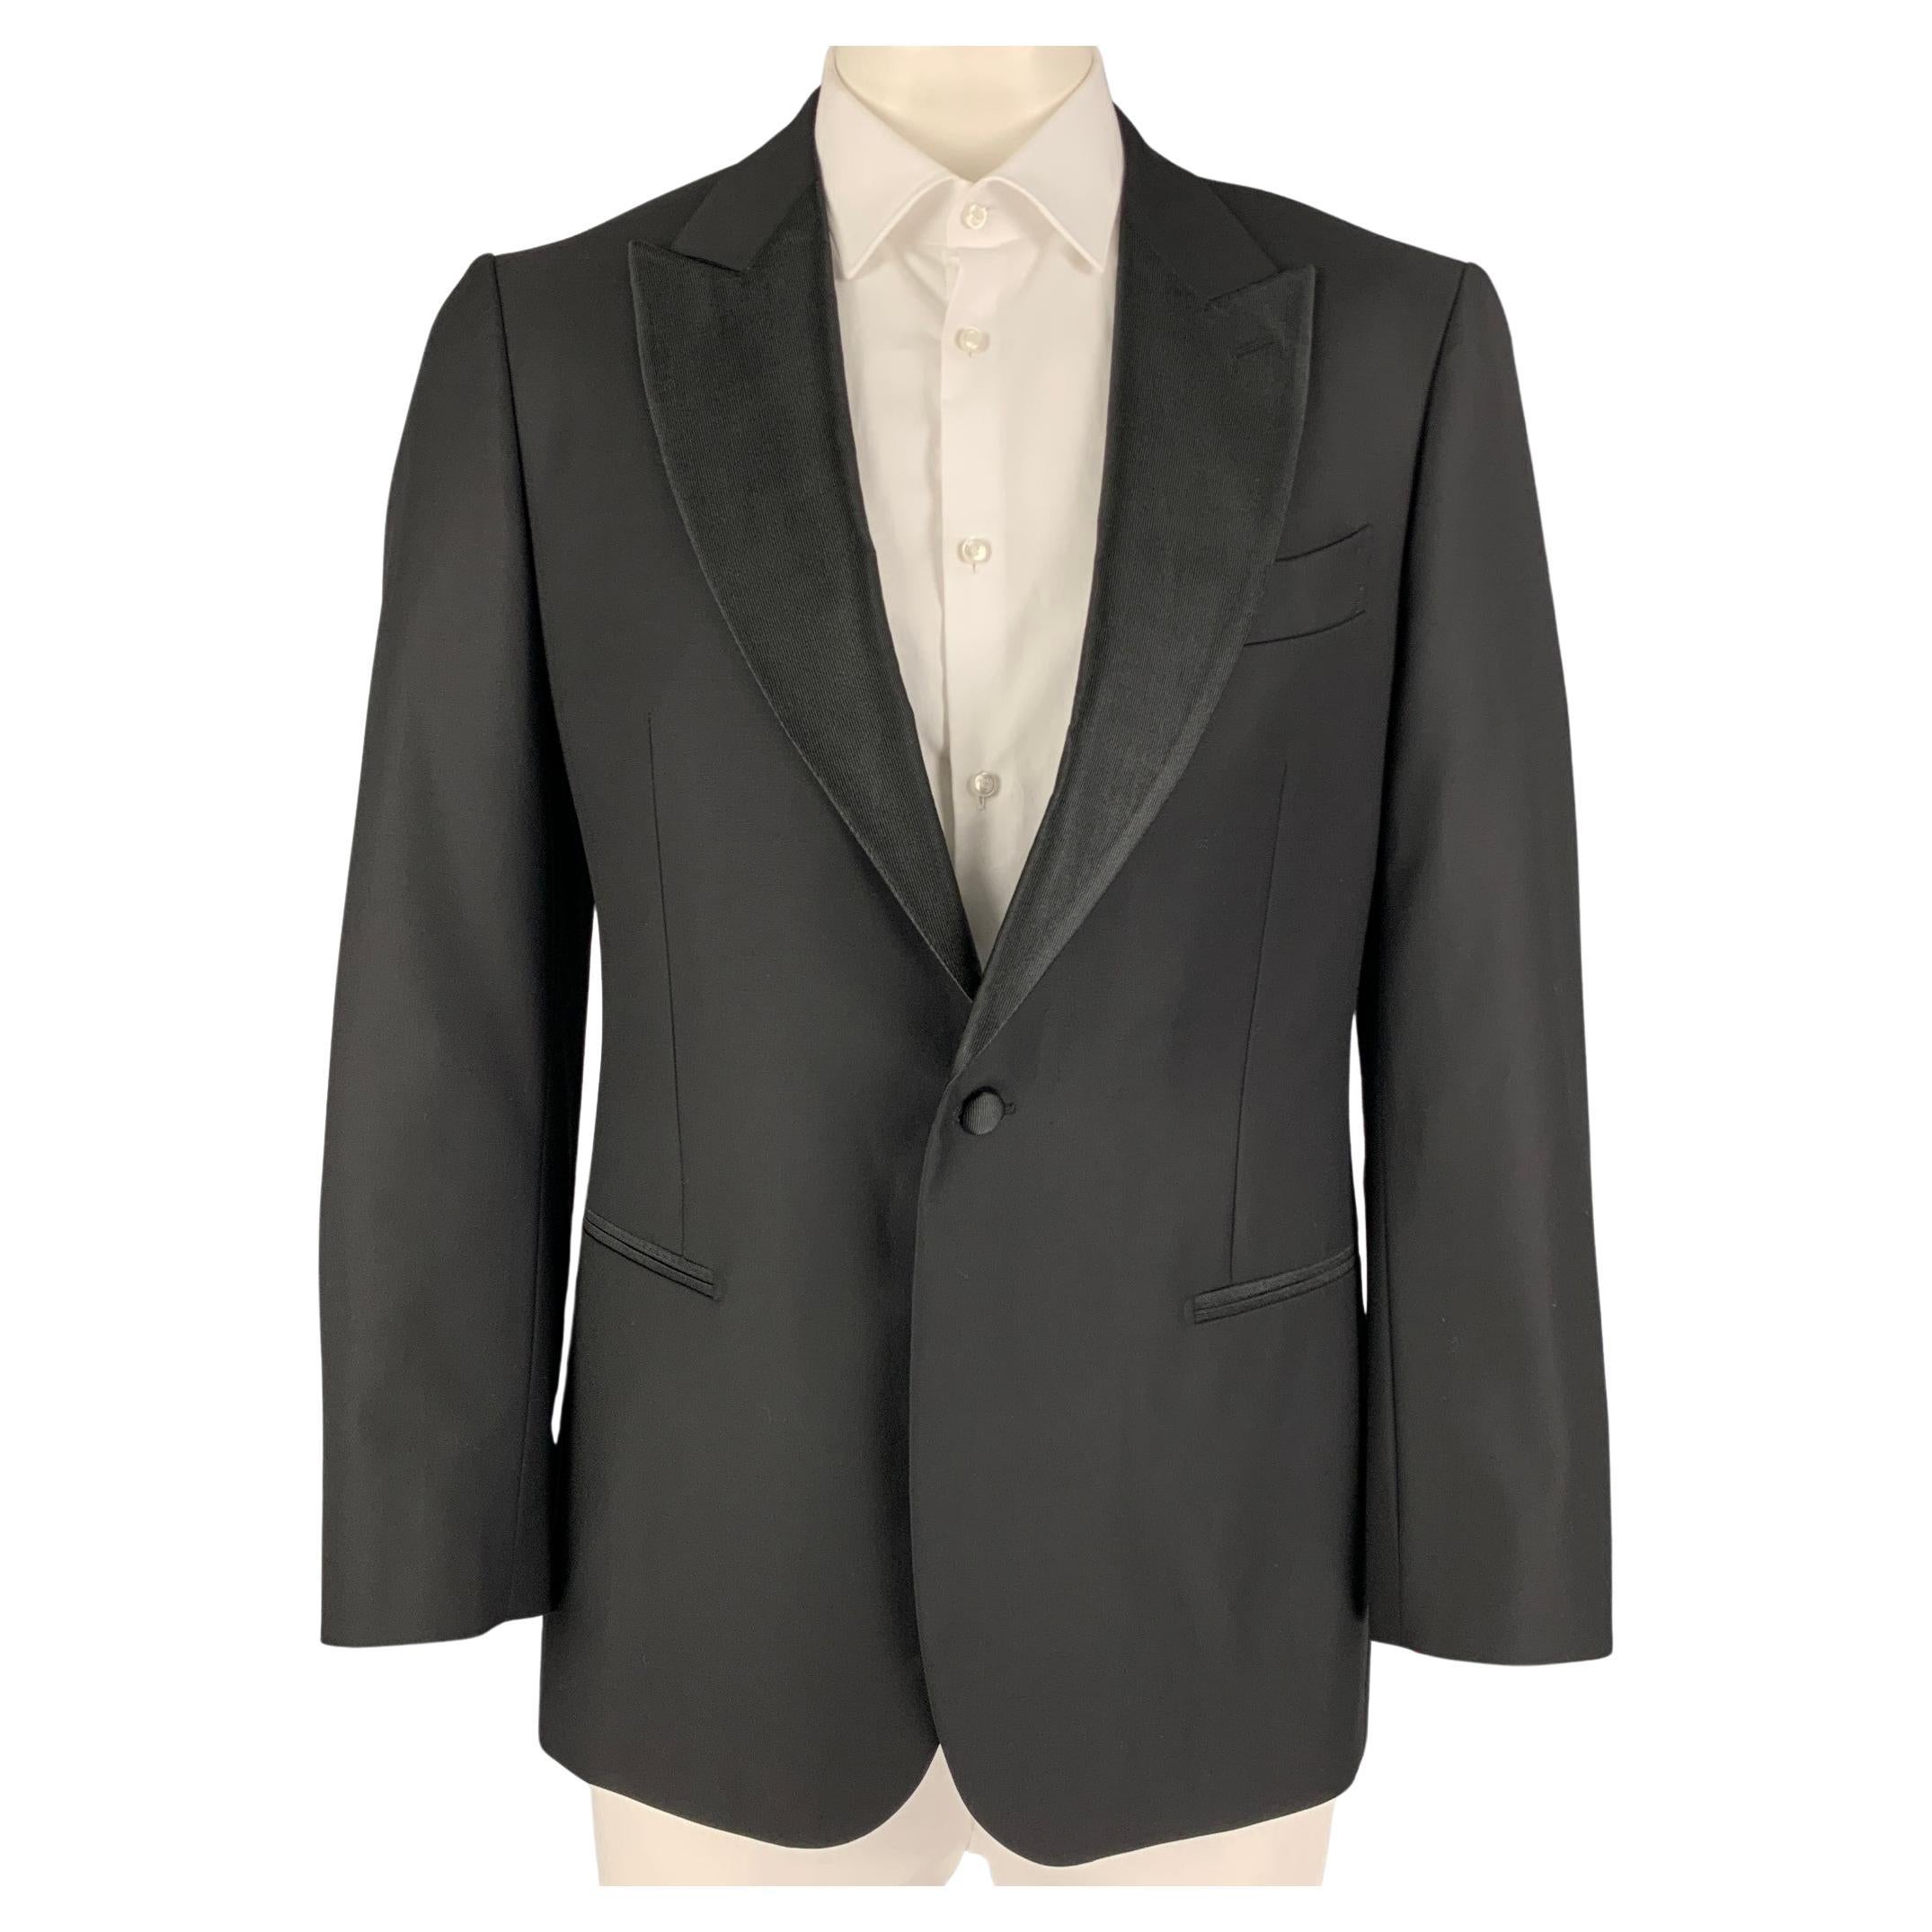 SUIT SUPPLY Size 44 Black Wool Tuxedo Sport Coat